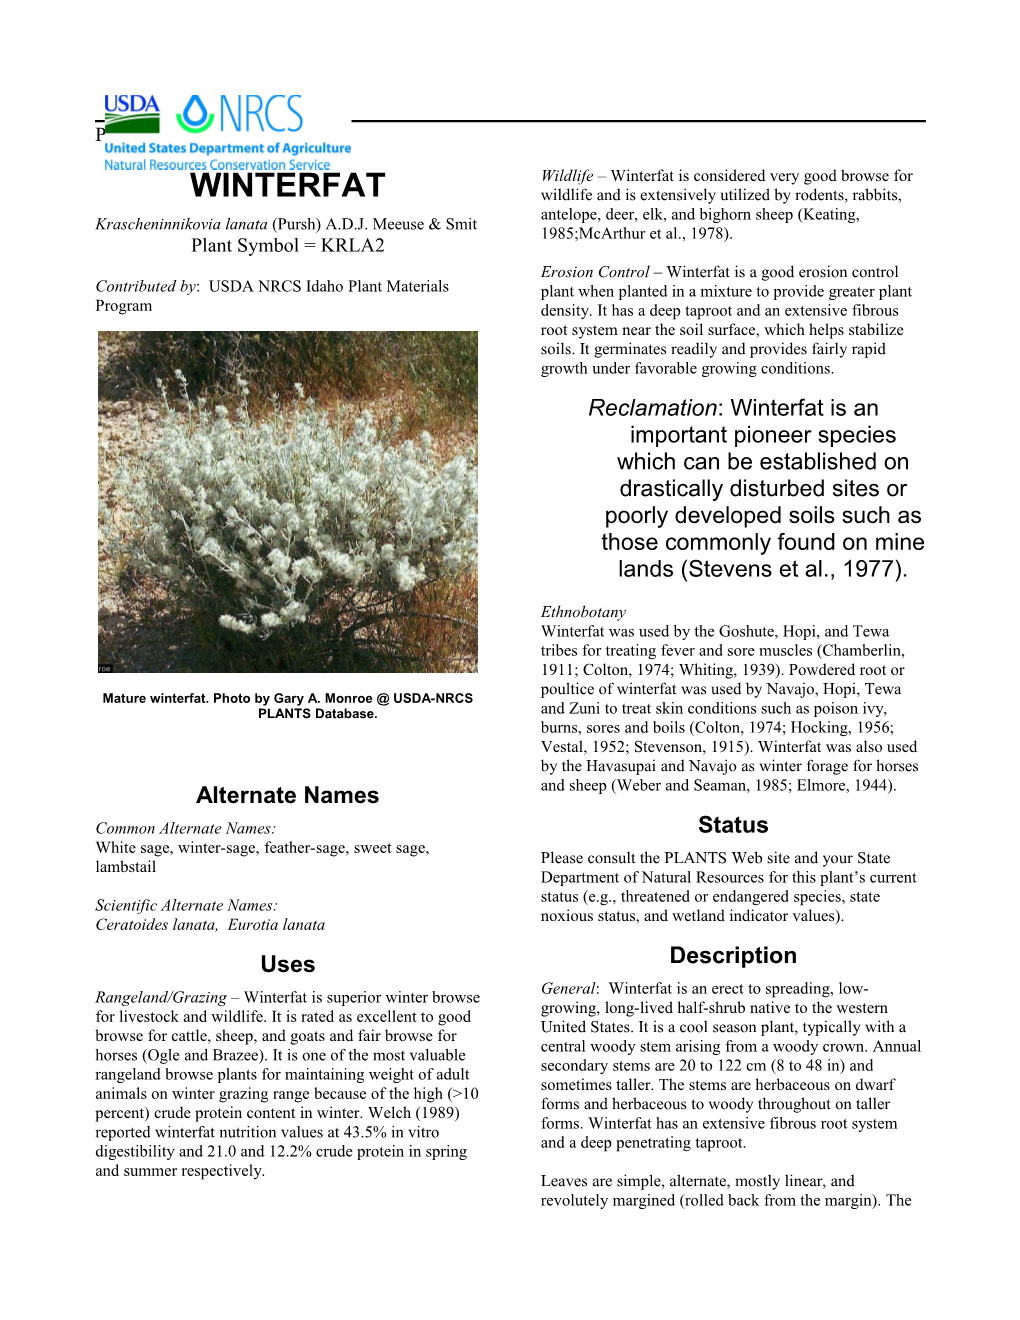 Plant Guide for Winterfat (Krascheninnikovia Lanata)